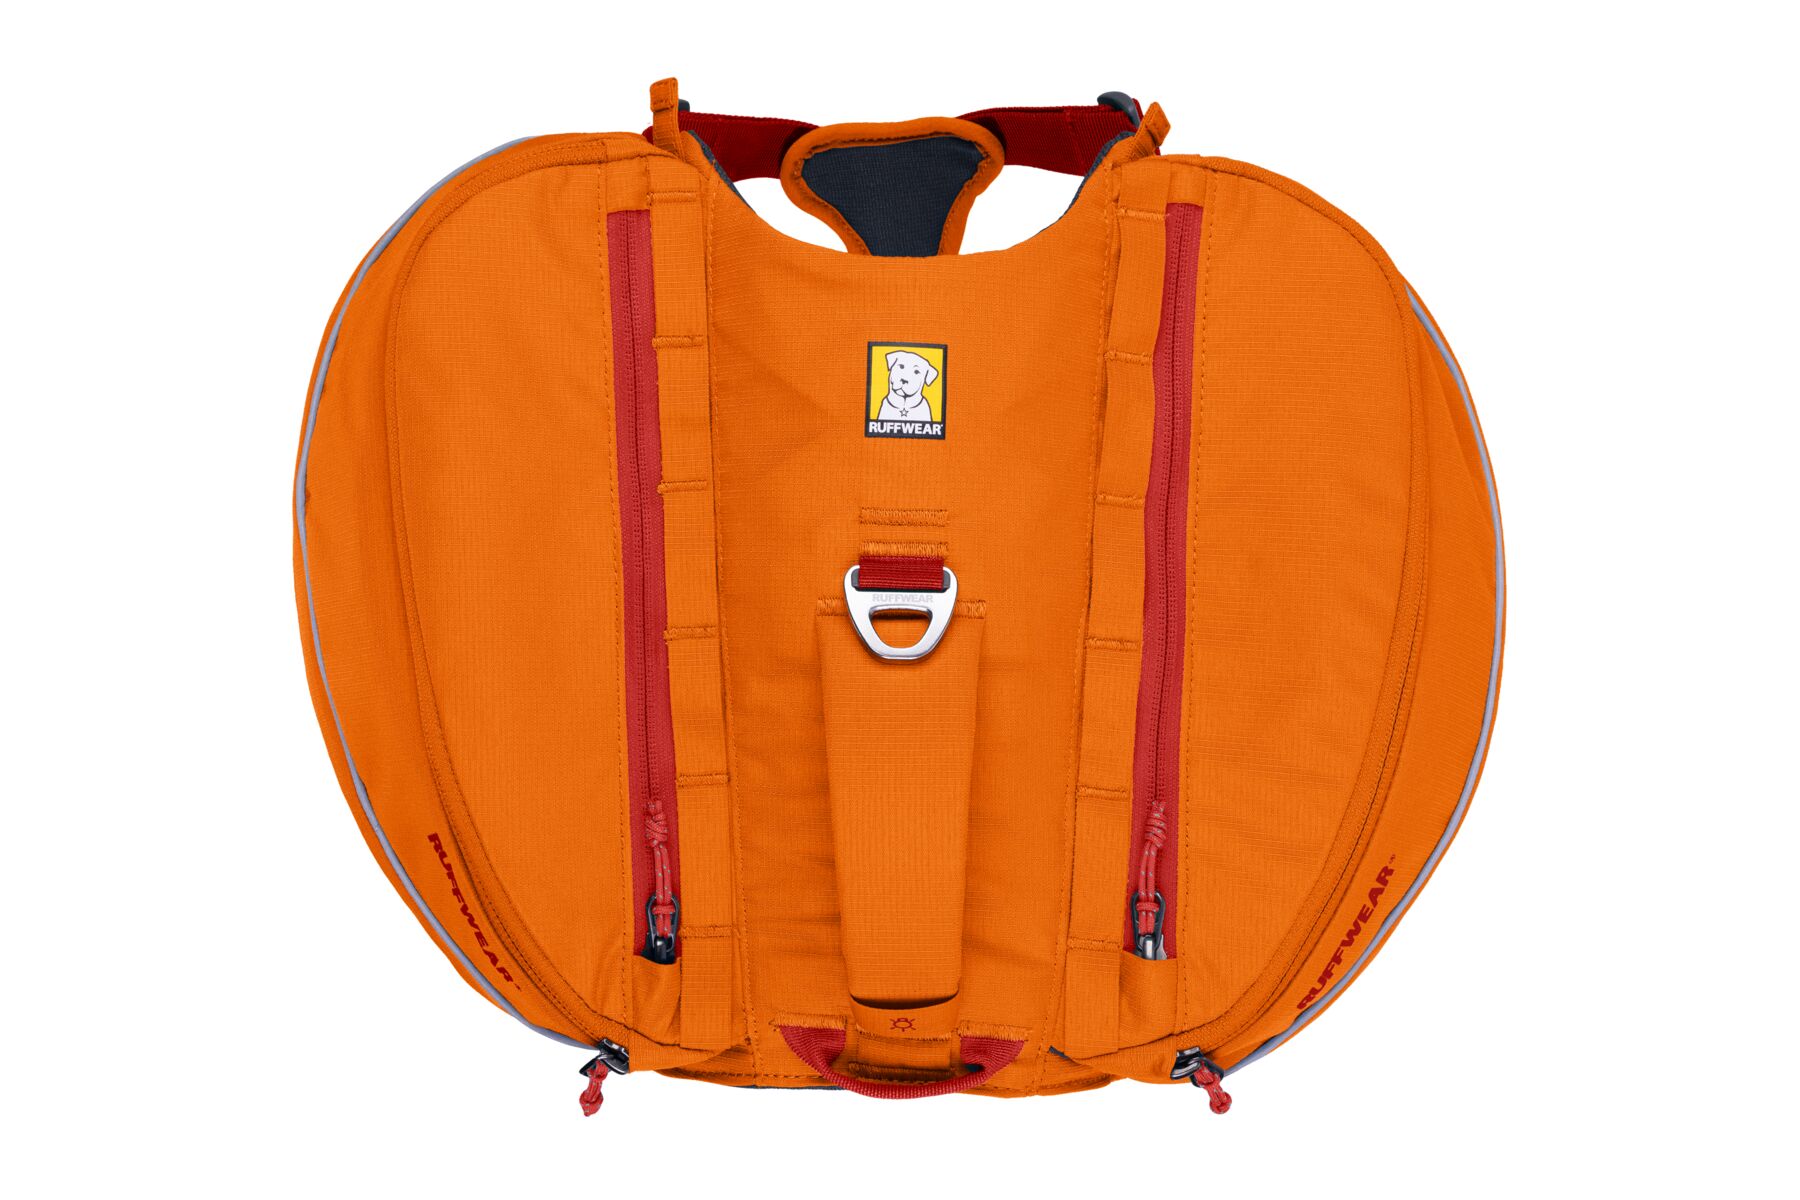 RuffWear Approach™ Pack Campfire Orange